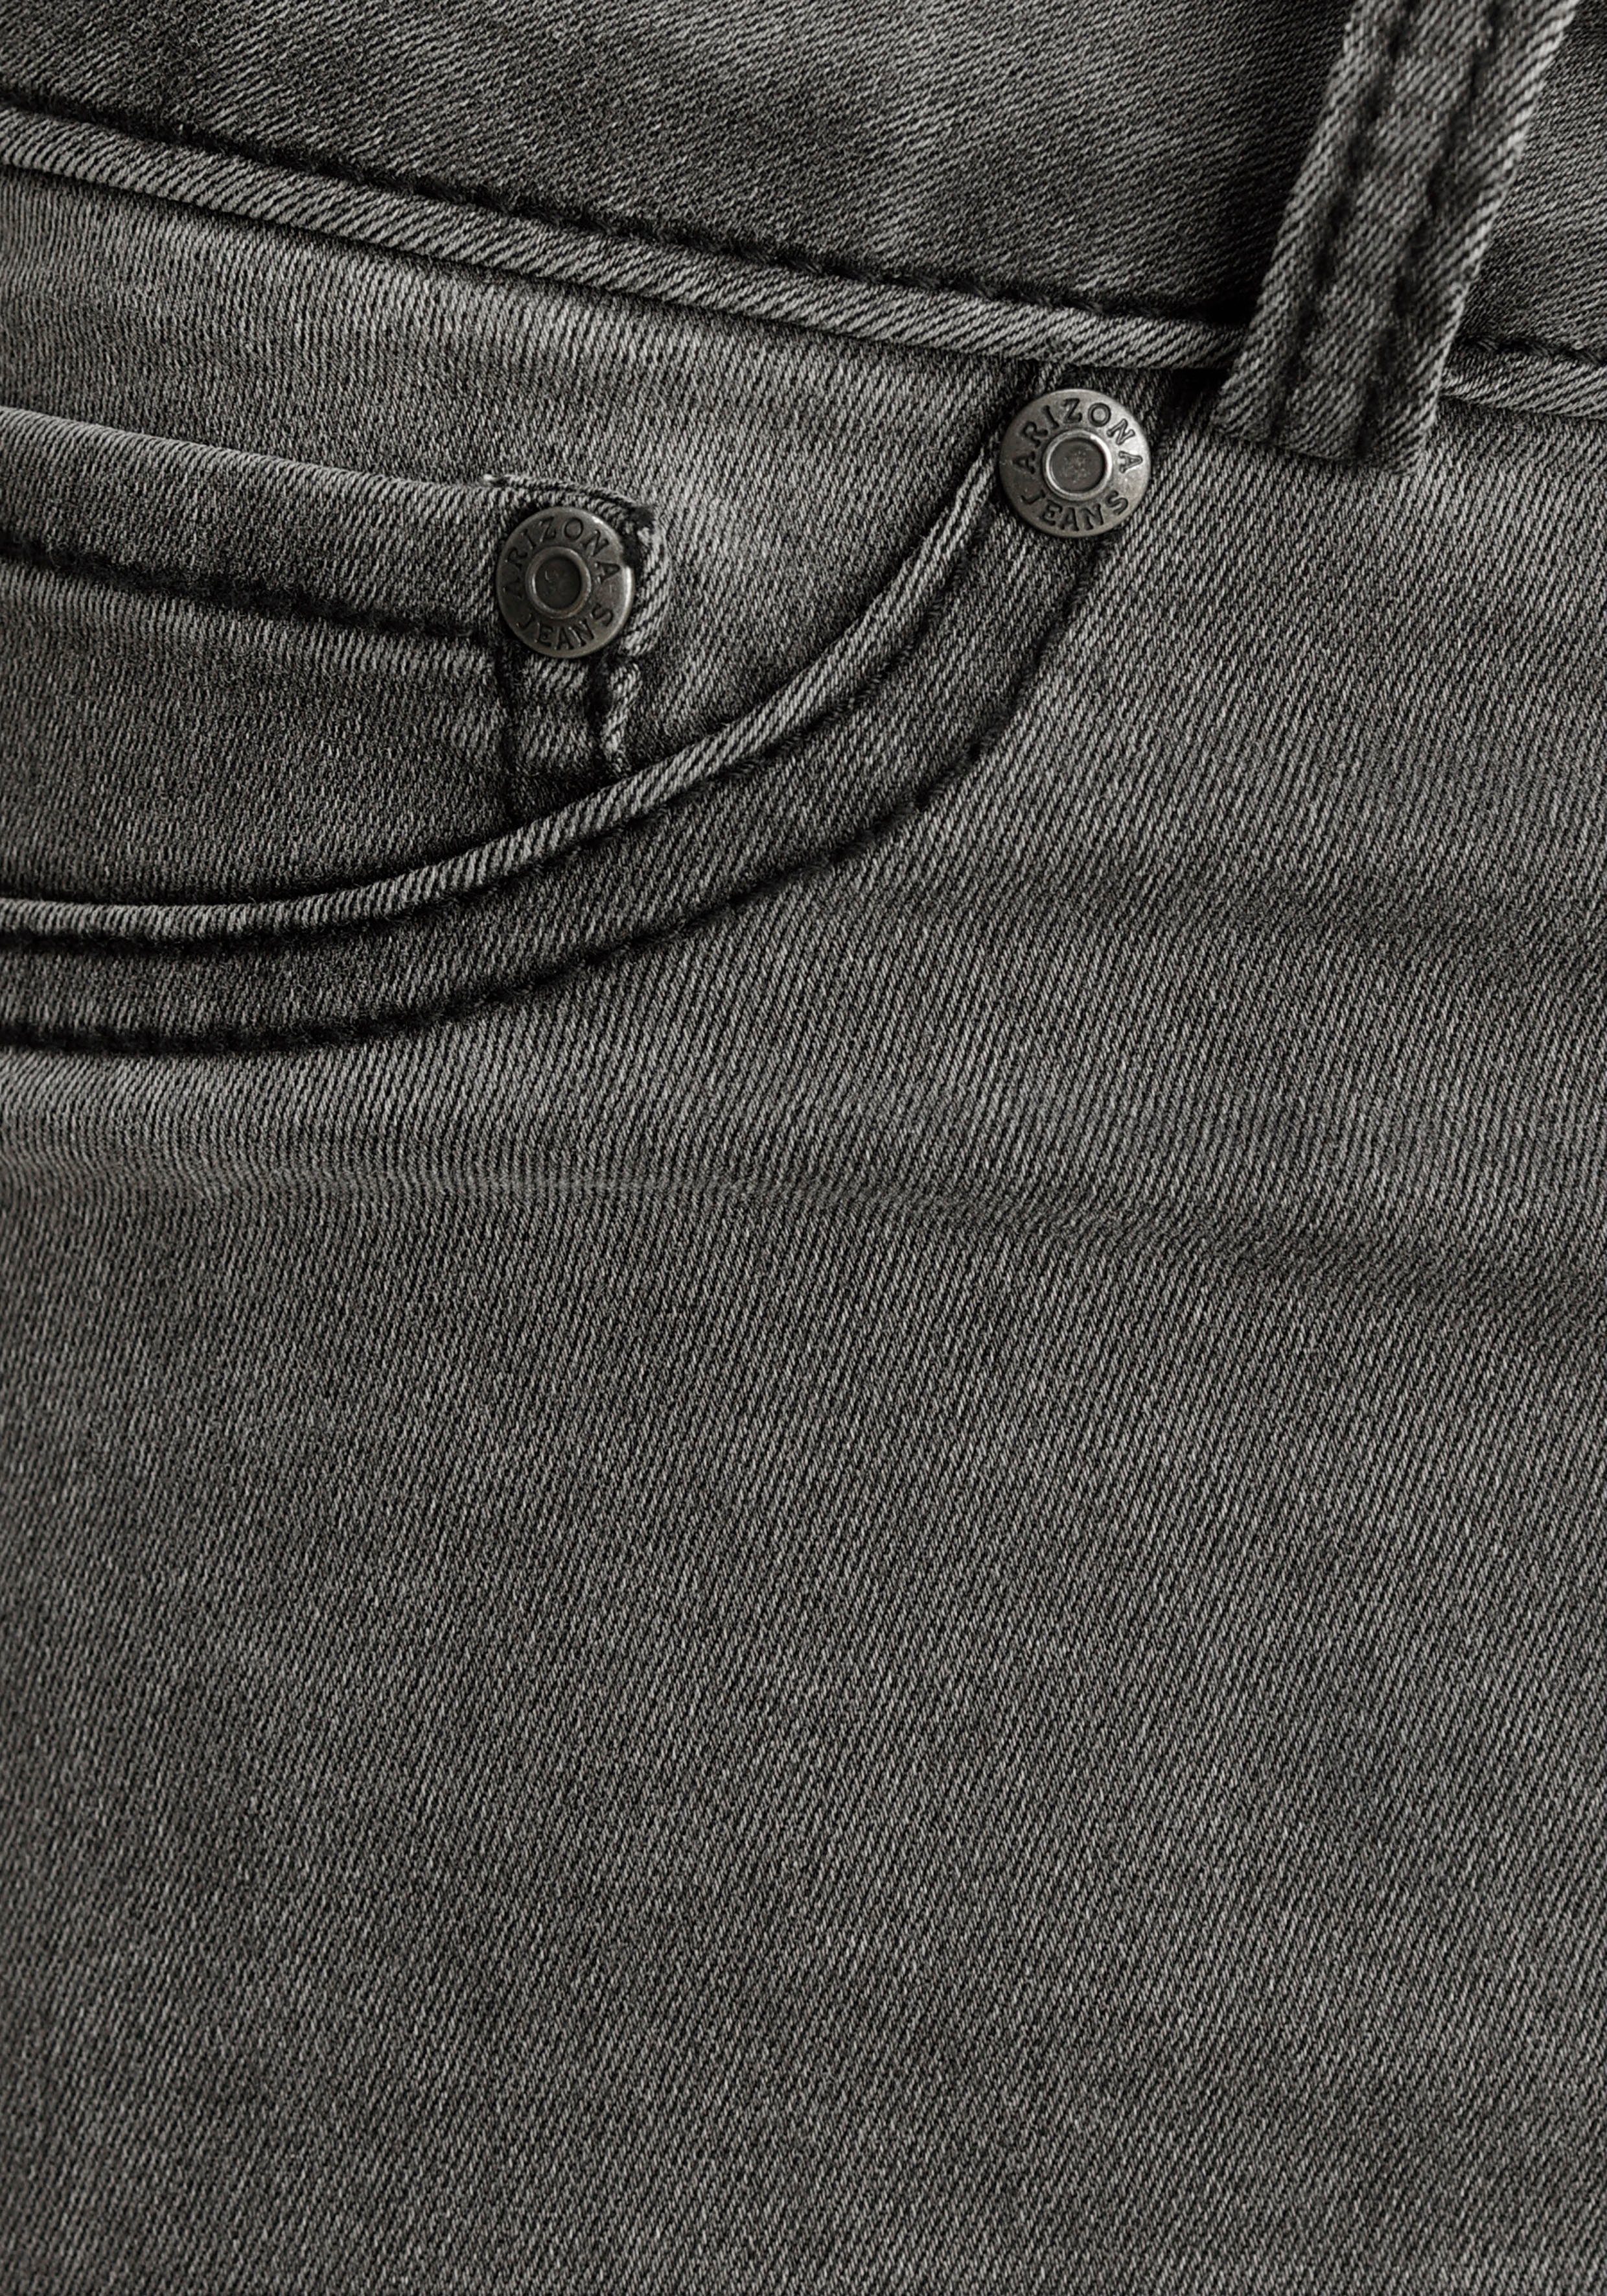 Arizona Bootcut-Jeans mit Stretch Waist High Ultra Shapingnähten grey-used